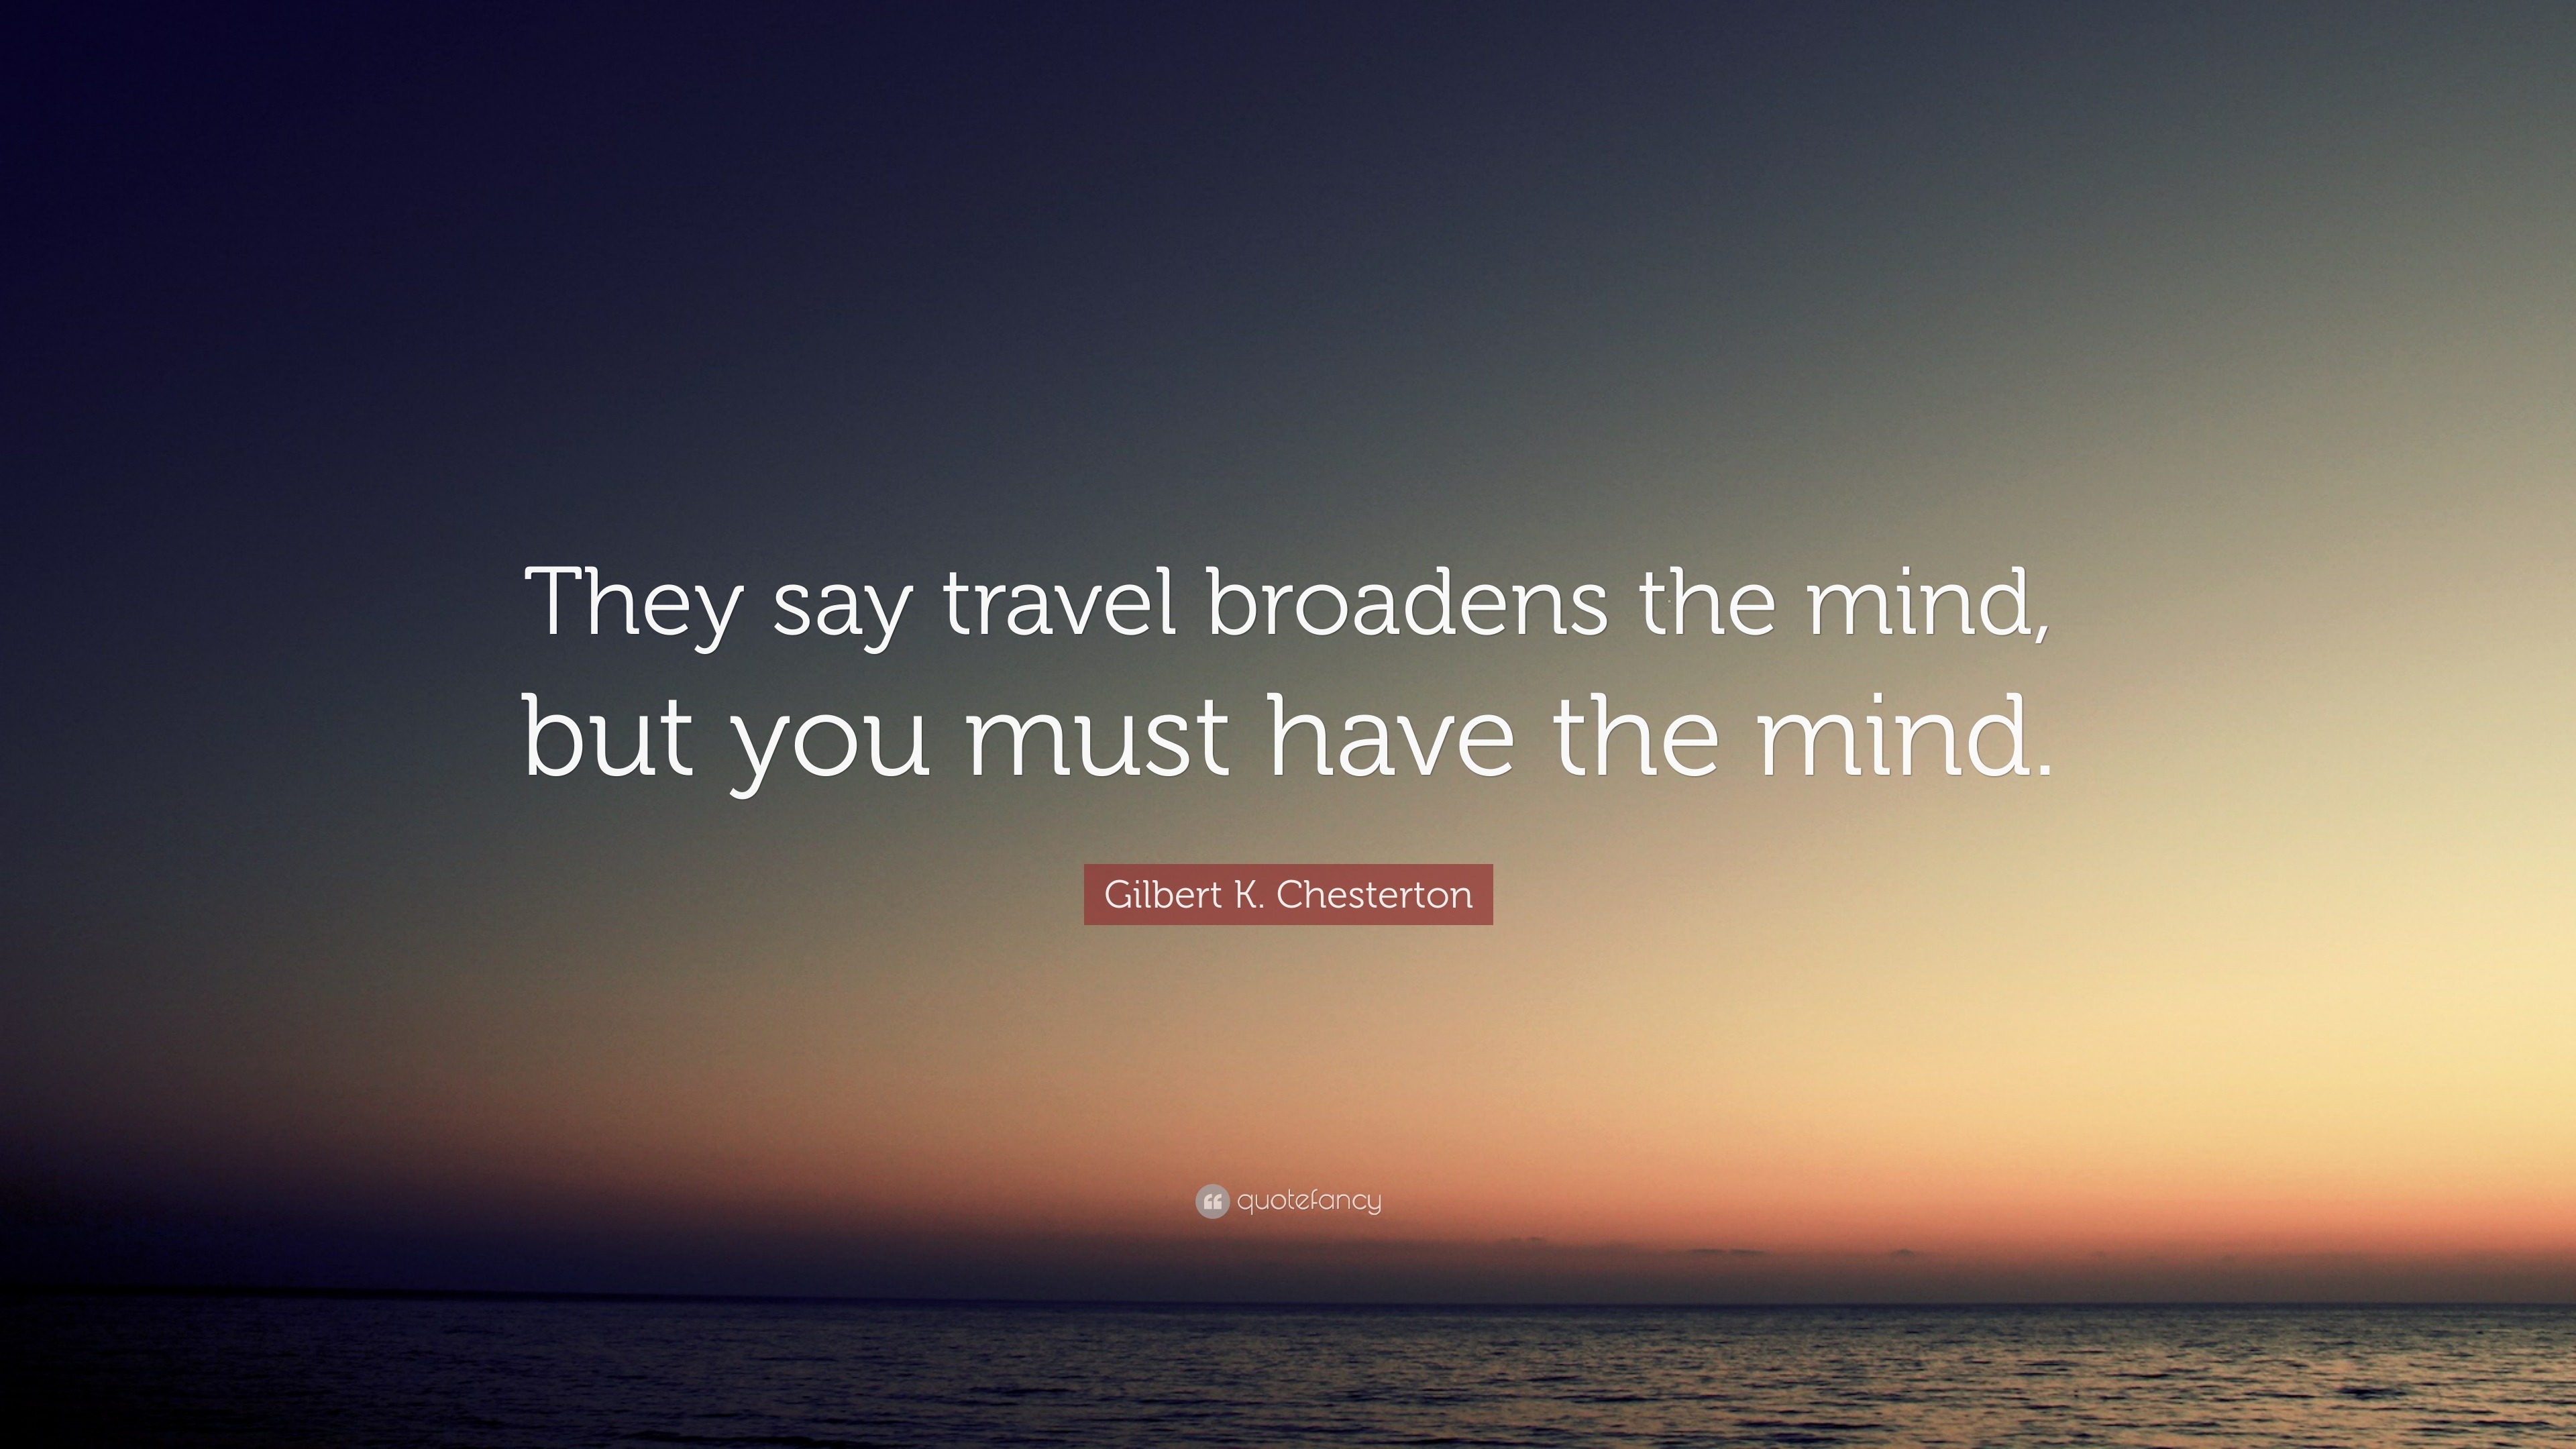 travel broadens the mind. do you agree